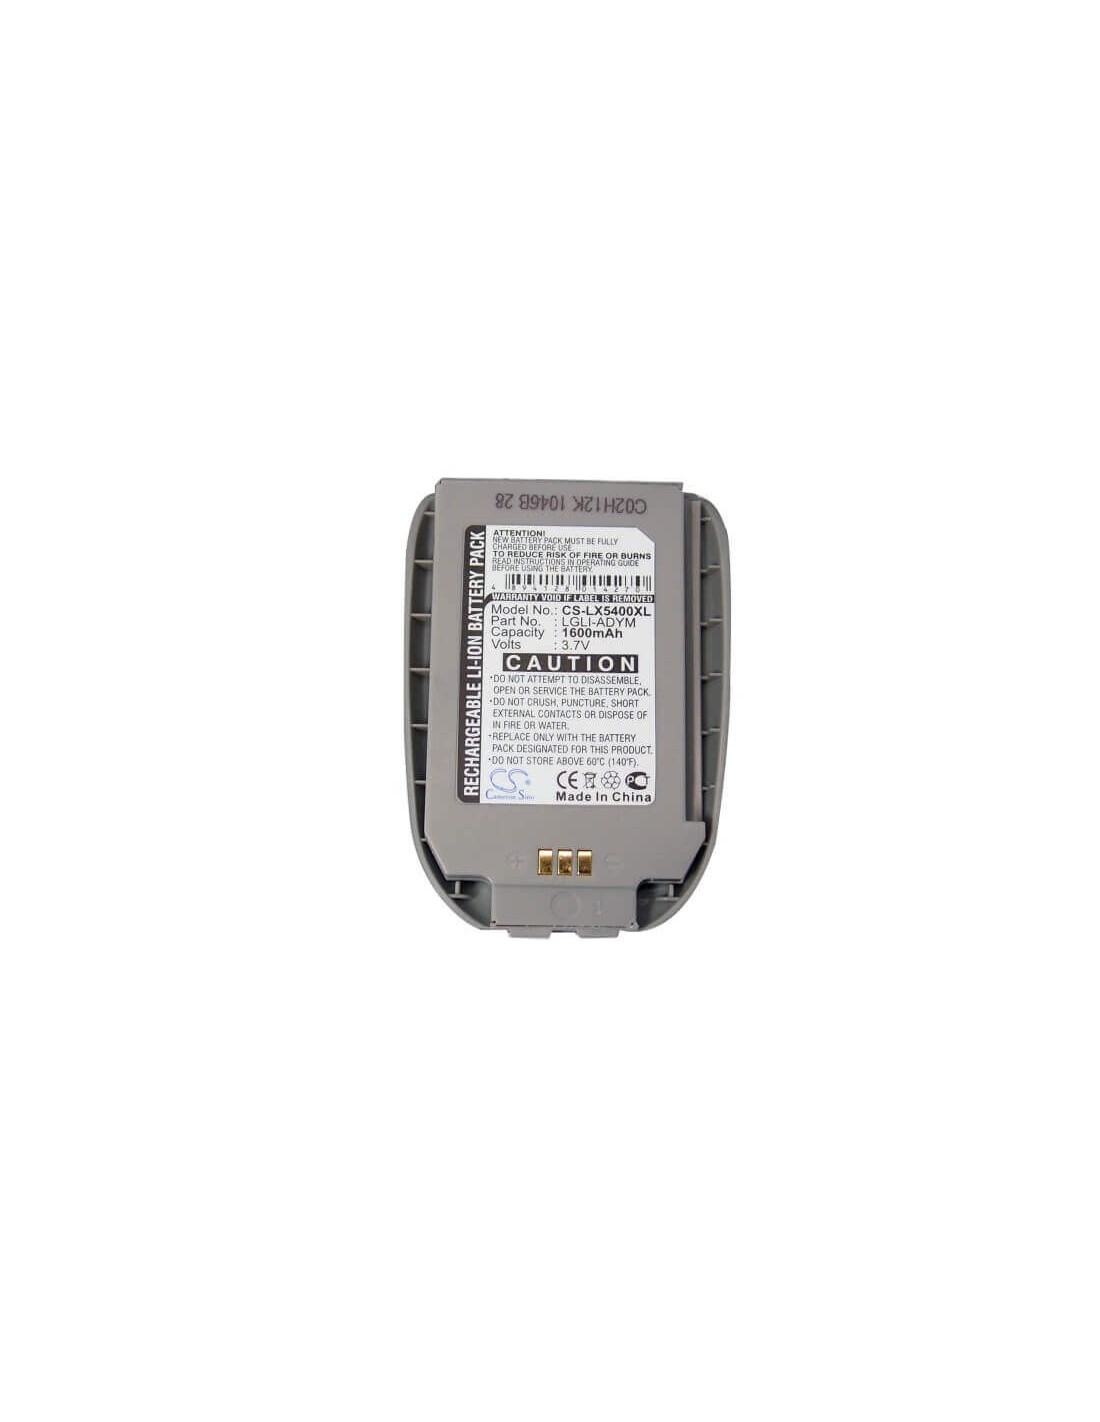 Battery for LG LX5400, VI5225, 5400A 3.7V, 1600mAh - 5.92Wh